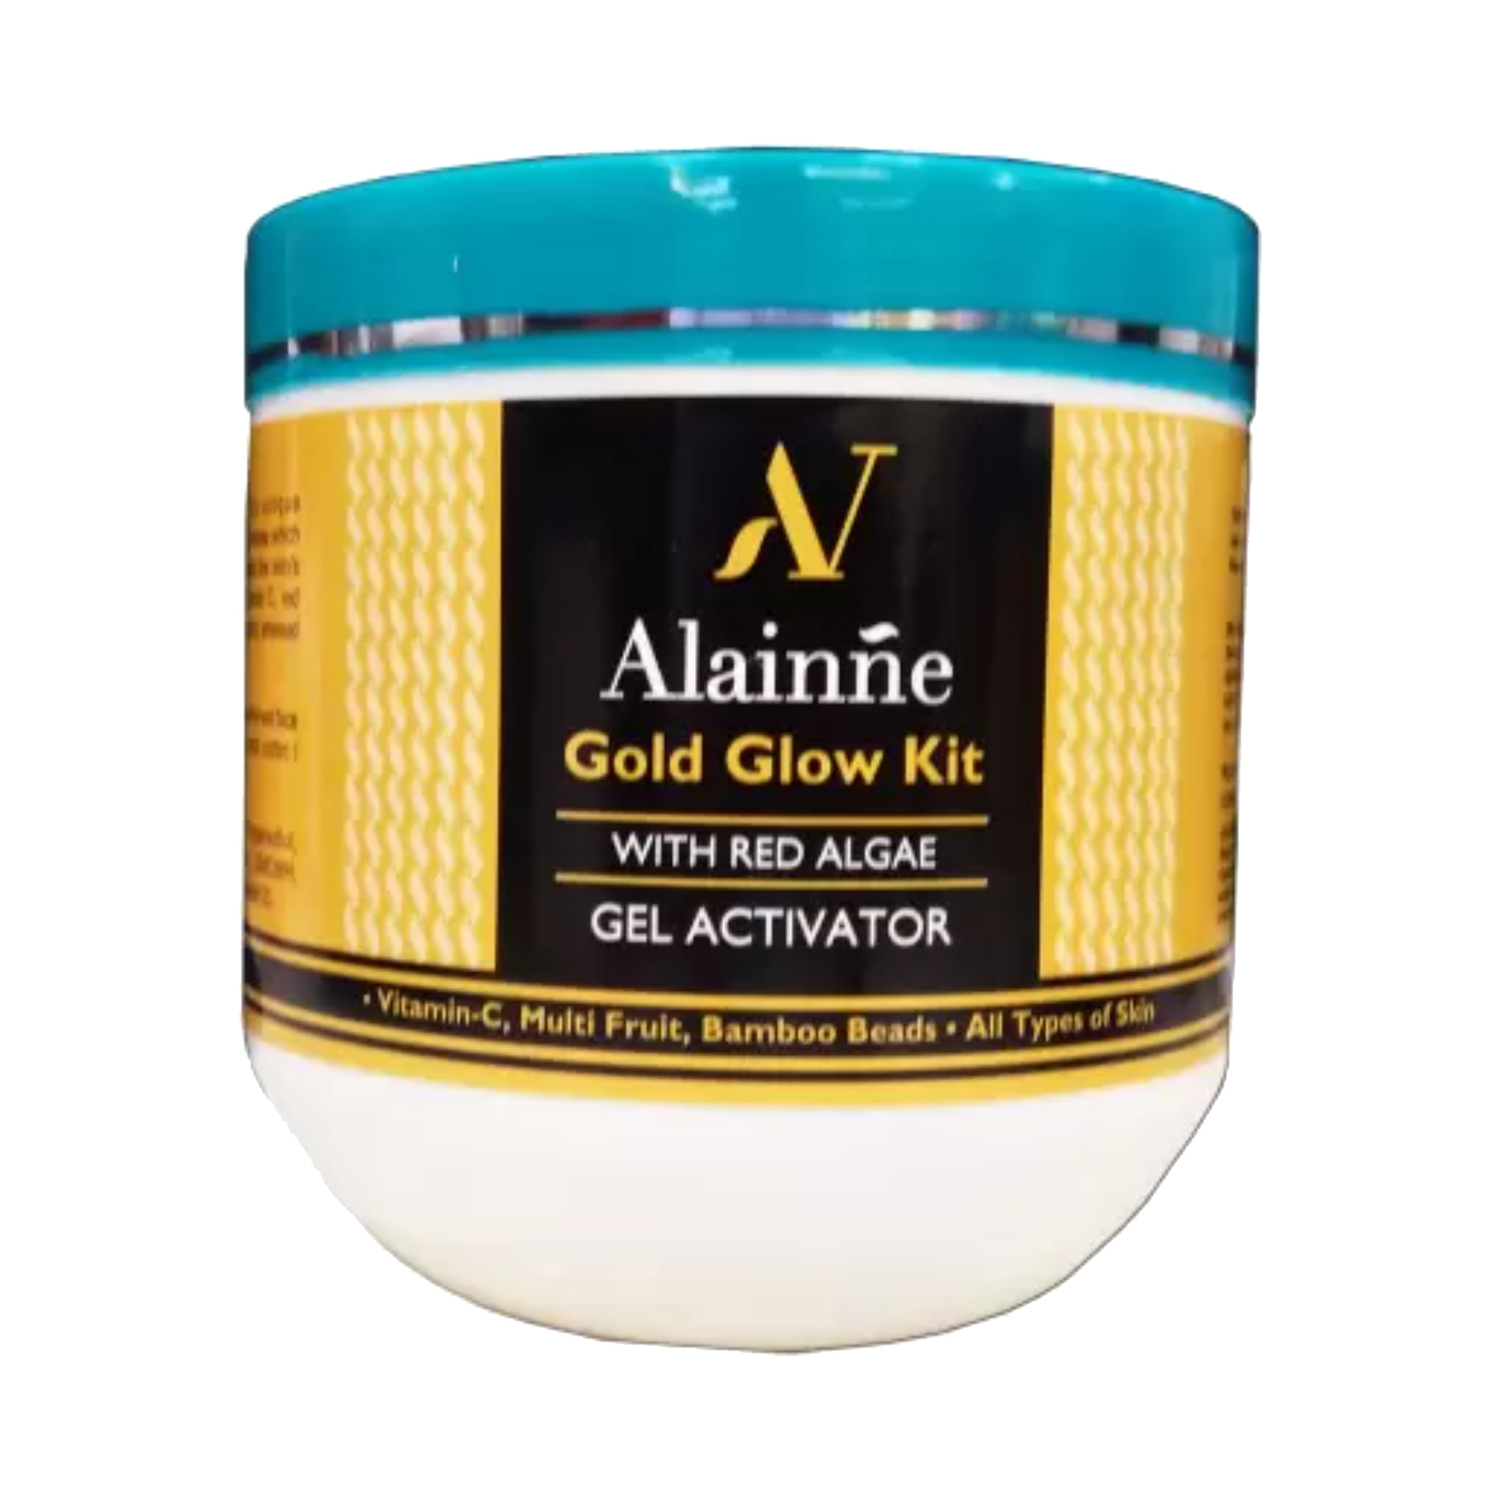 Alainne Gold Glow Kit With Red Algae Step-2 Gel Activator - (500g)